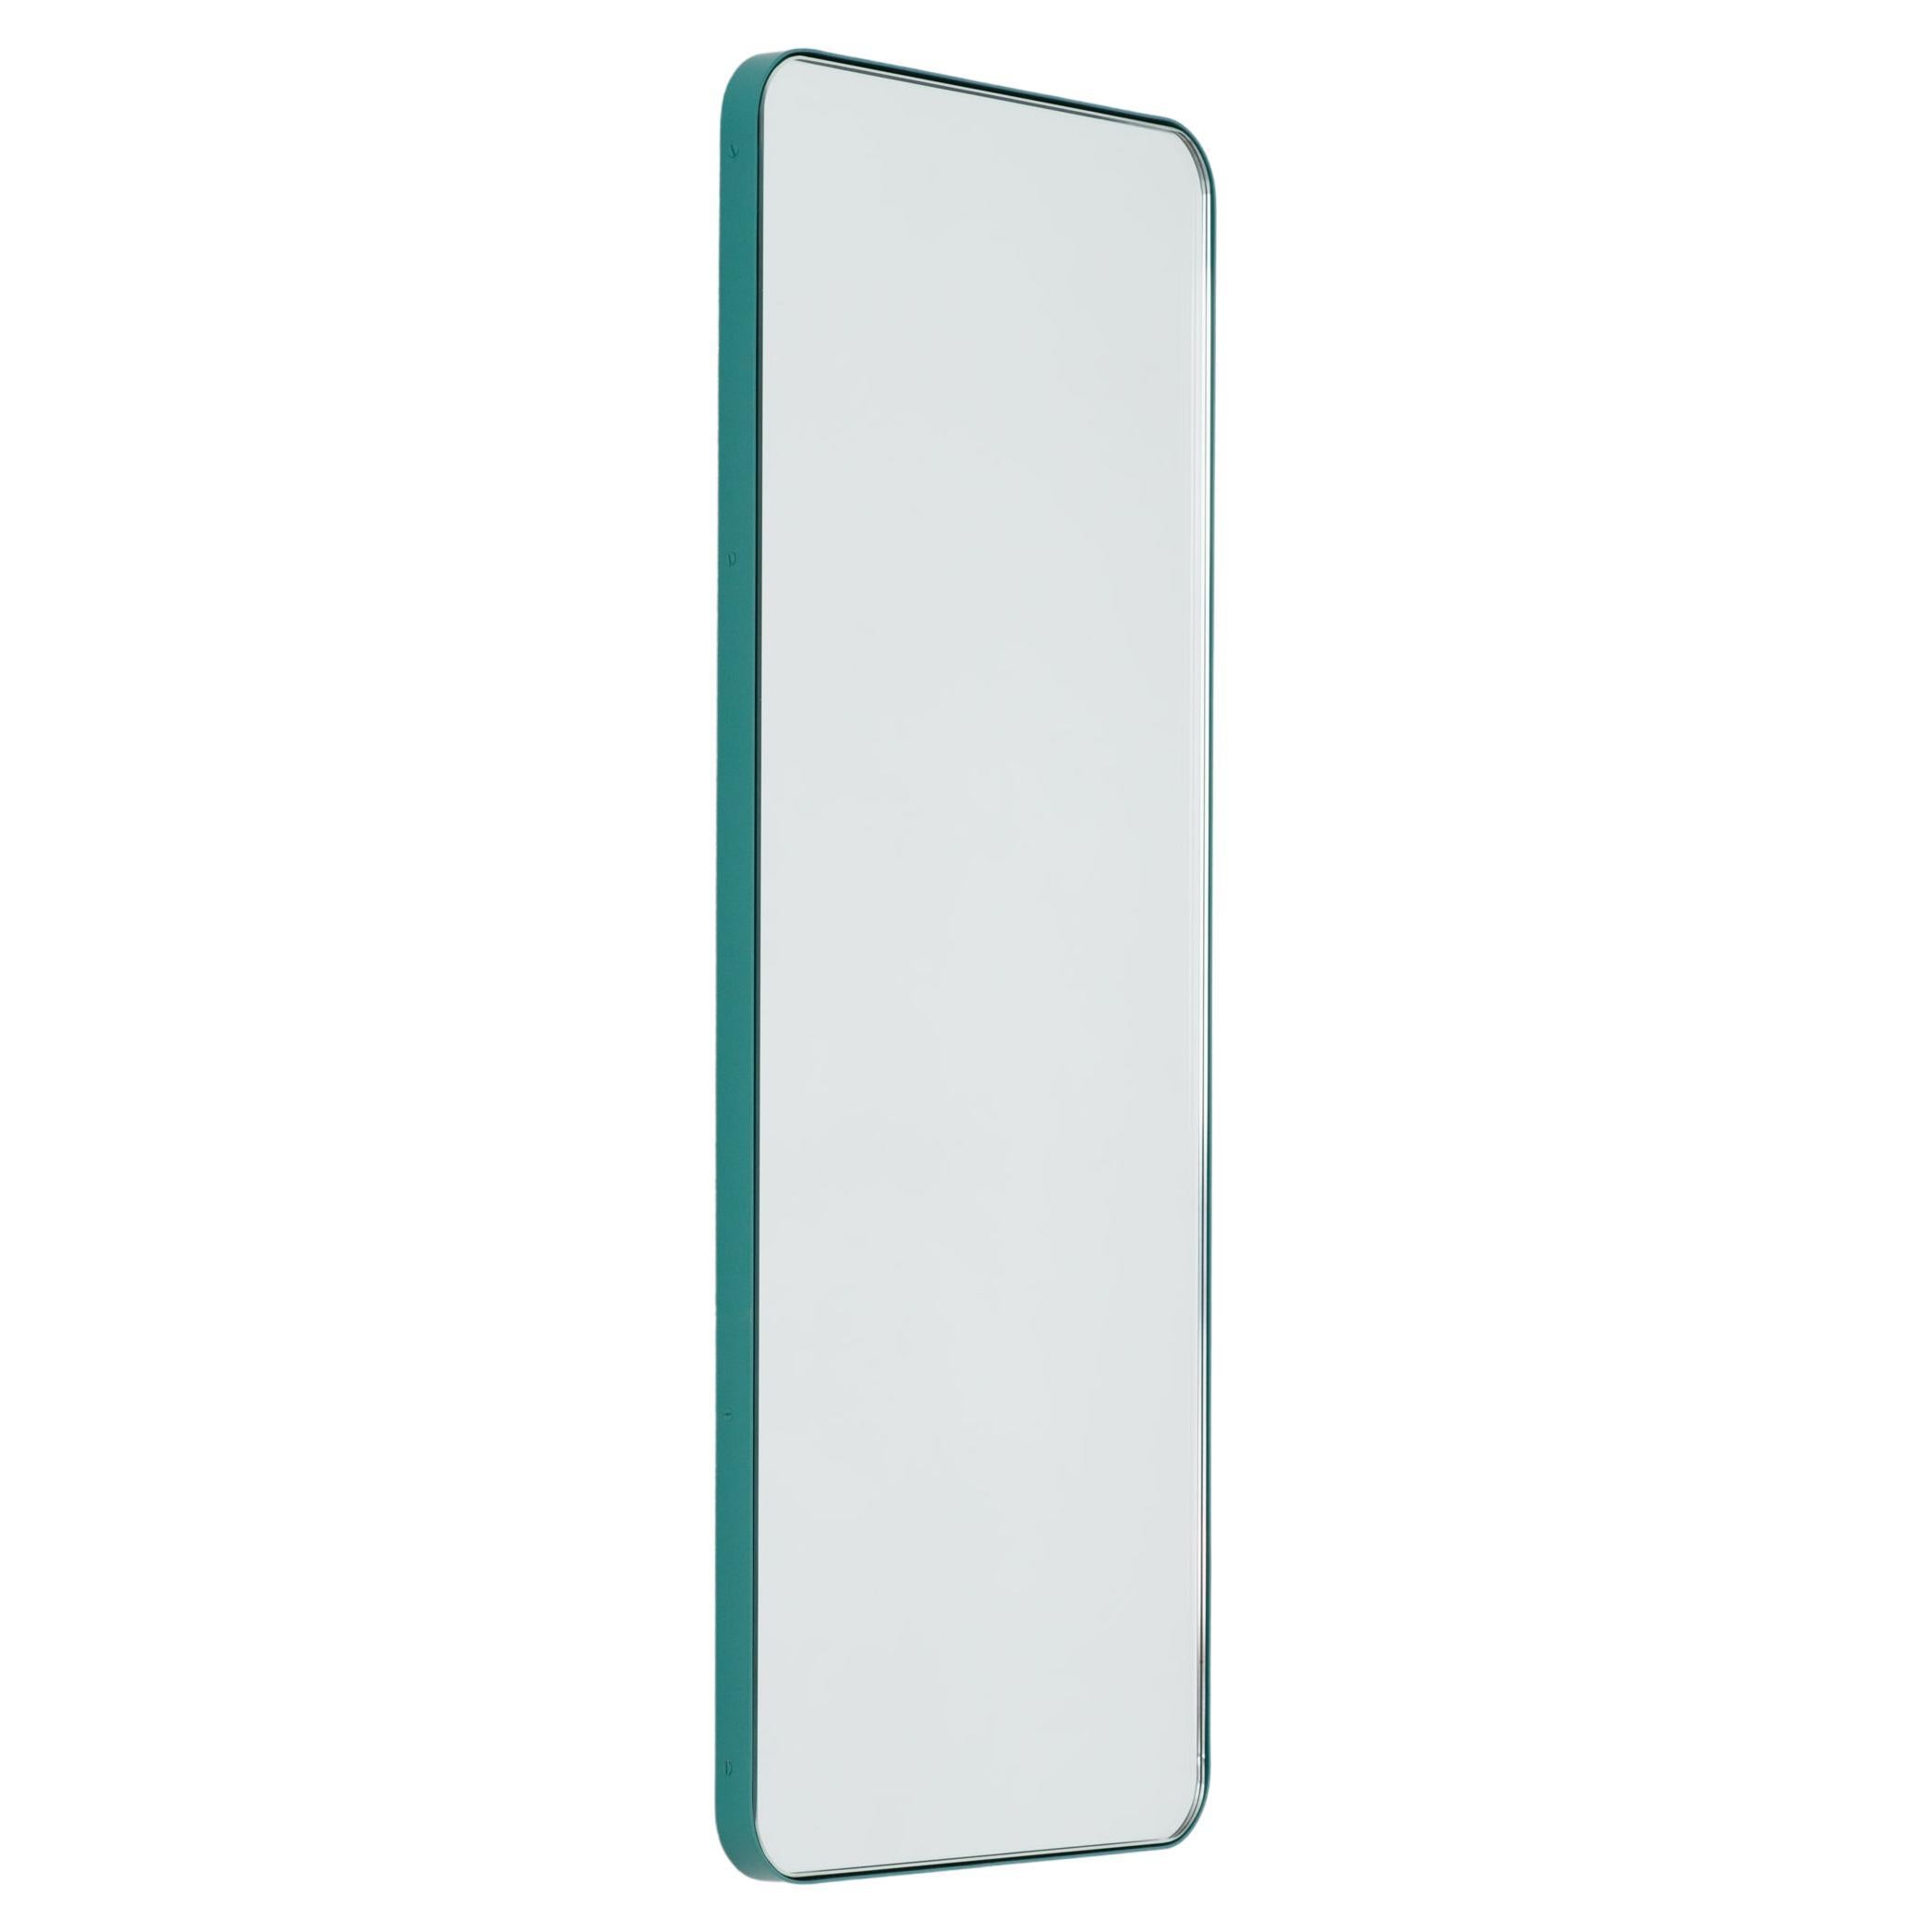 Quadris Rectangular Modern Mirror Mint Turquoise Frame, Large